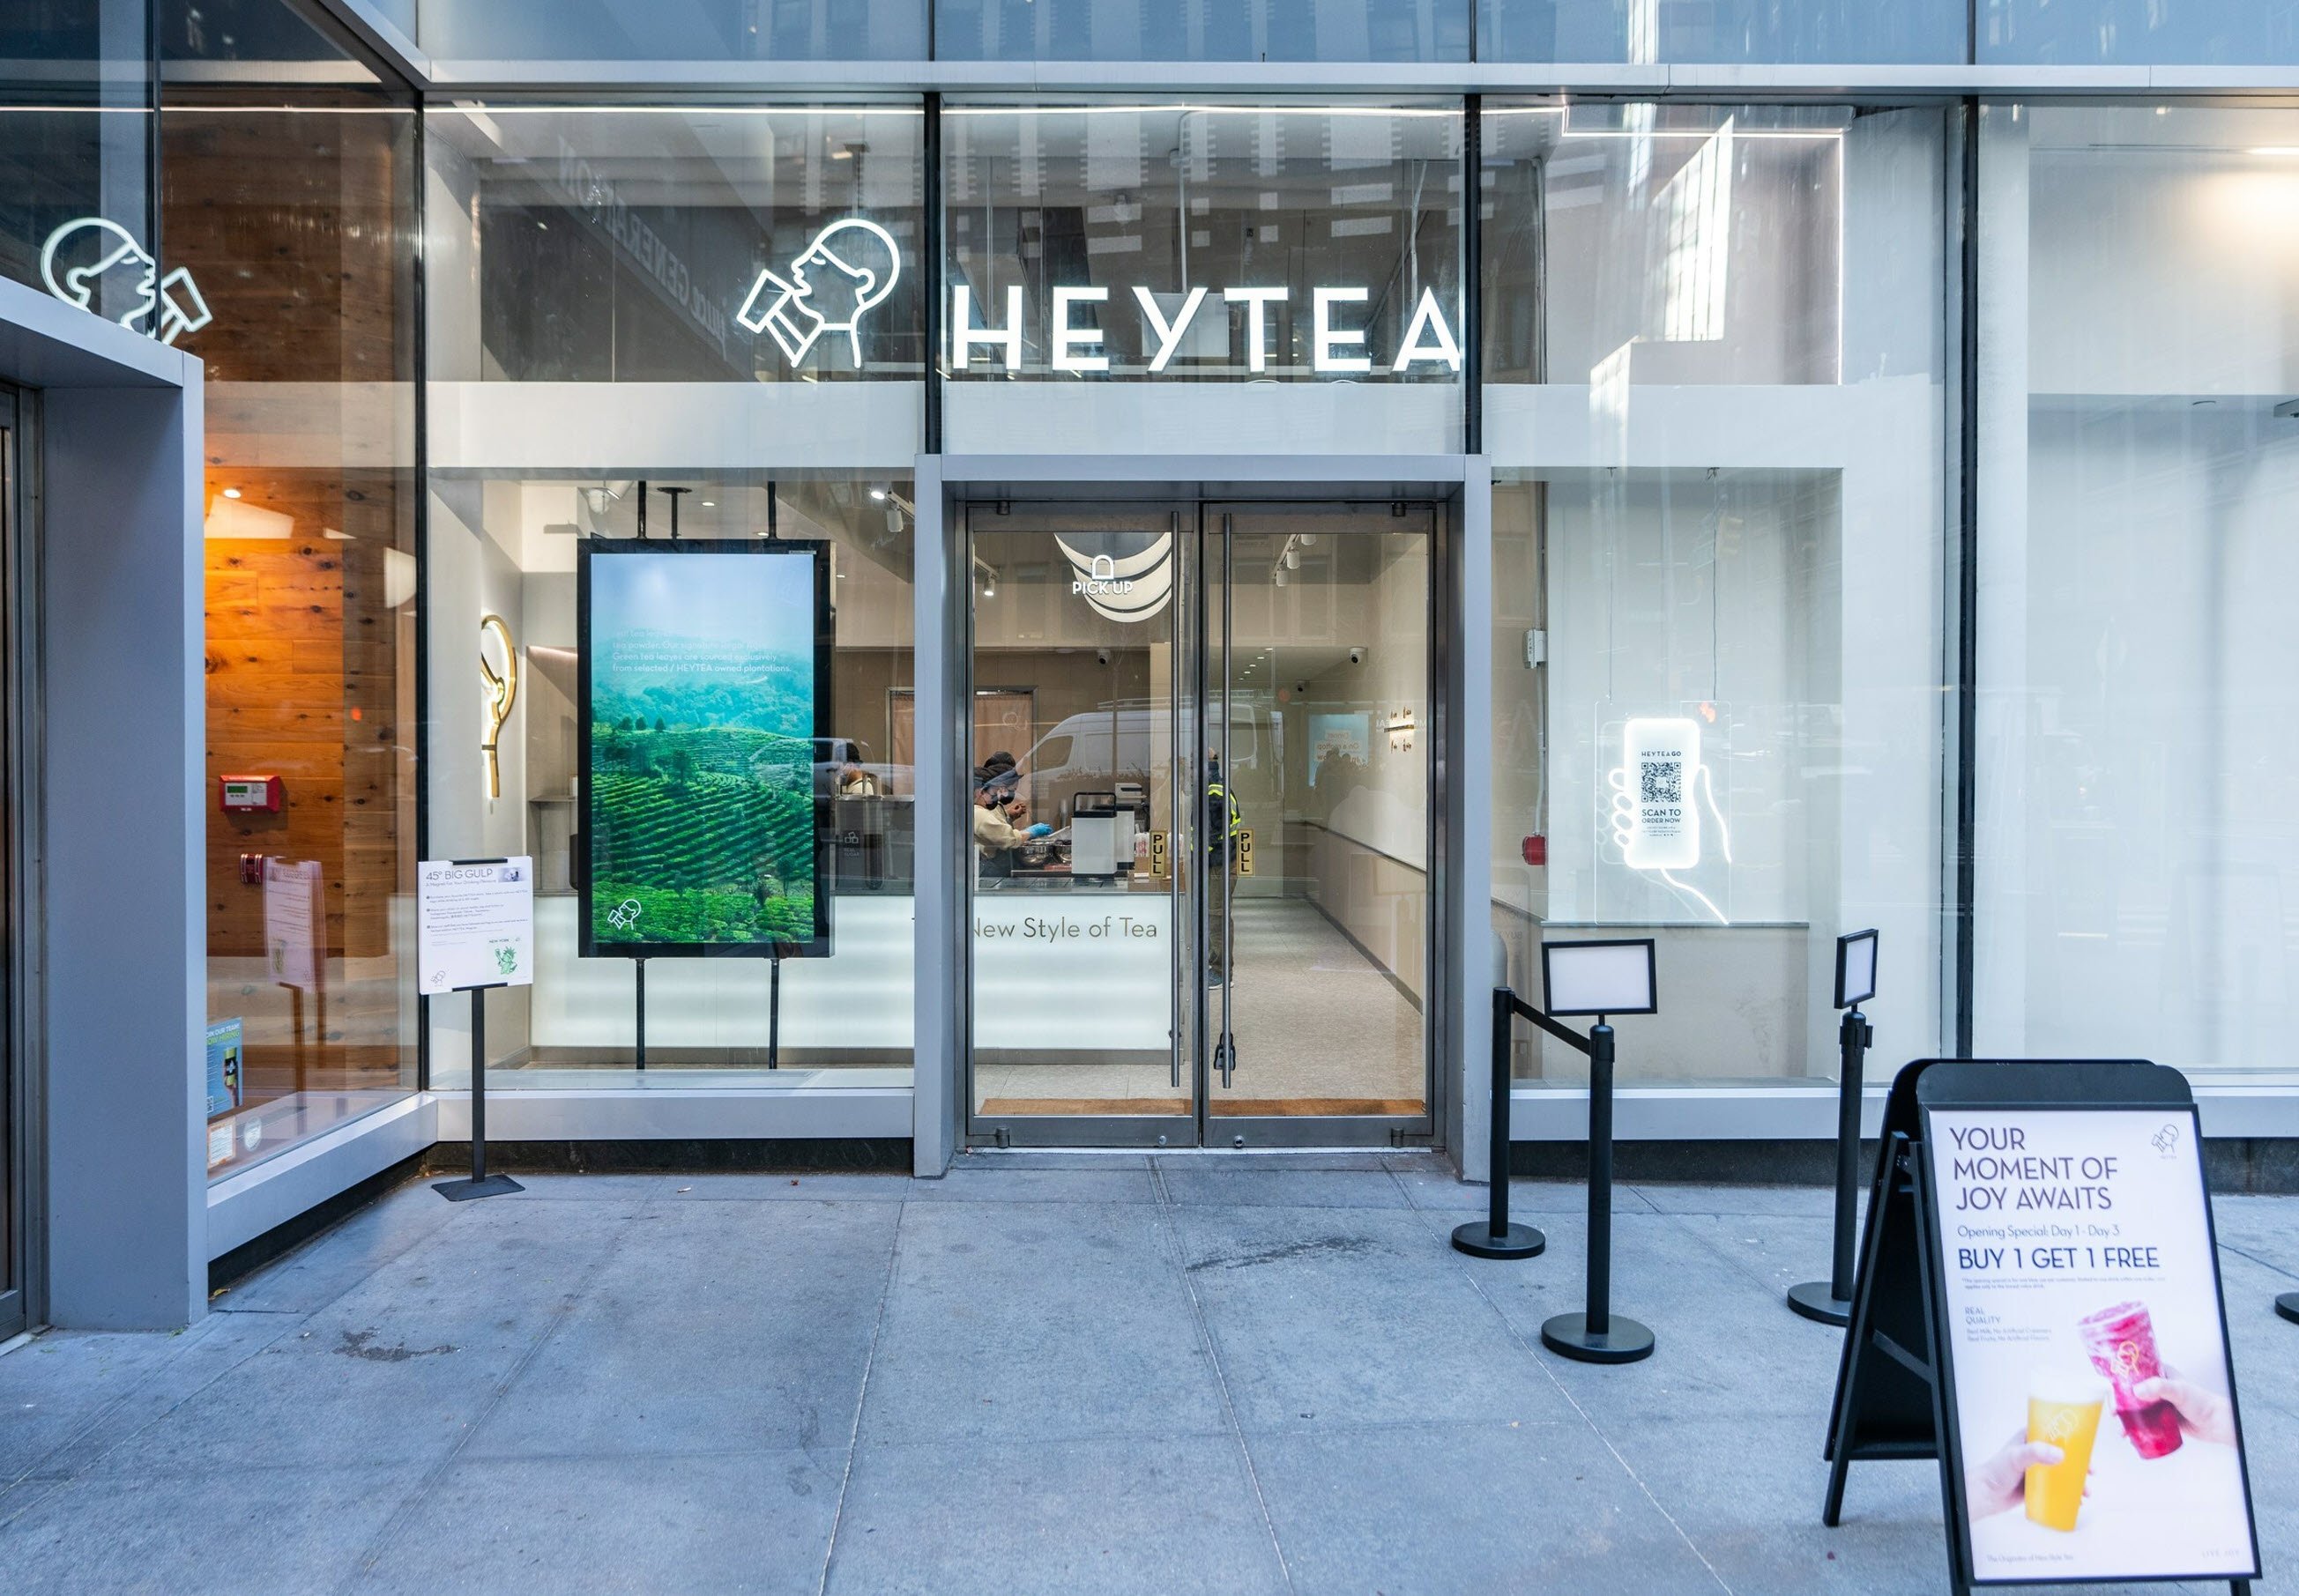 HEYTEA on Broadway - New York City - Tea Industry - Boba Tea Cheese Tea